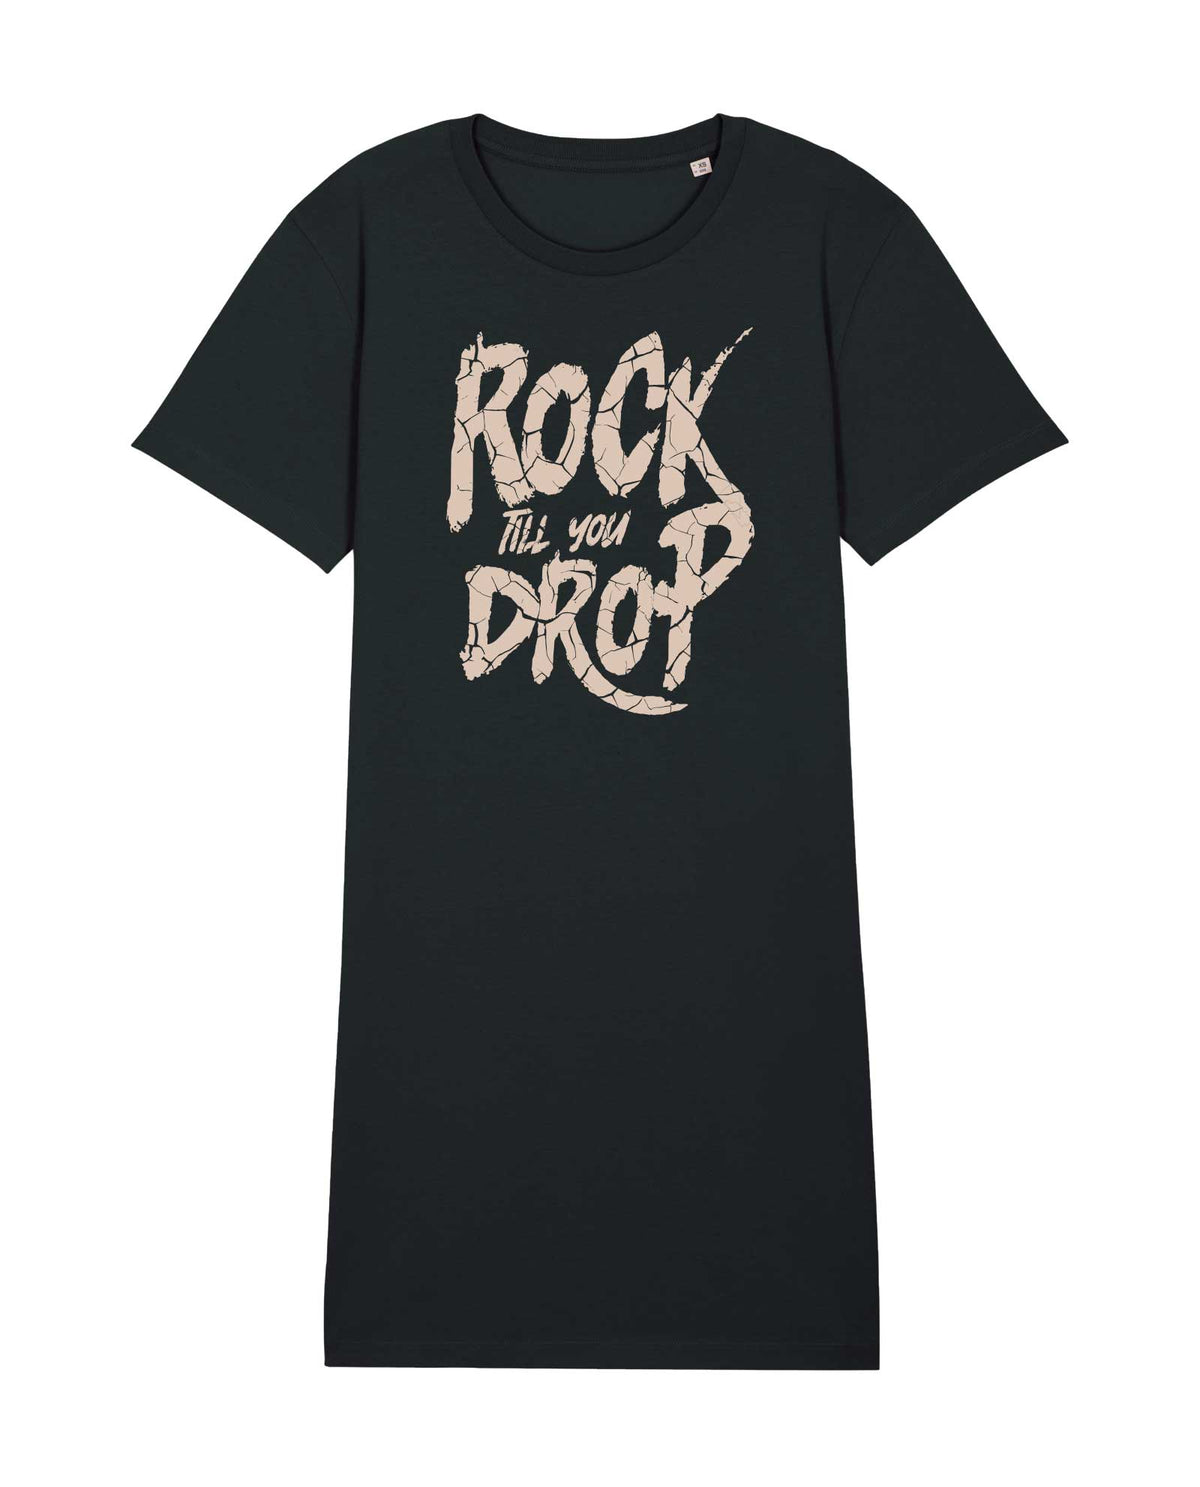 Rock Till You Drop Tee Dress - Black - Rocktud - Rocktud